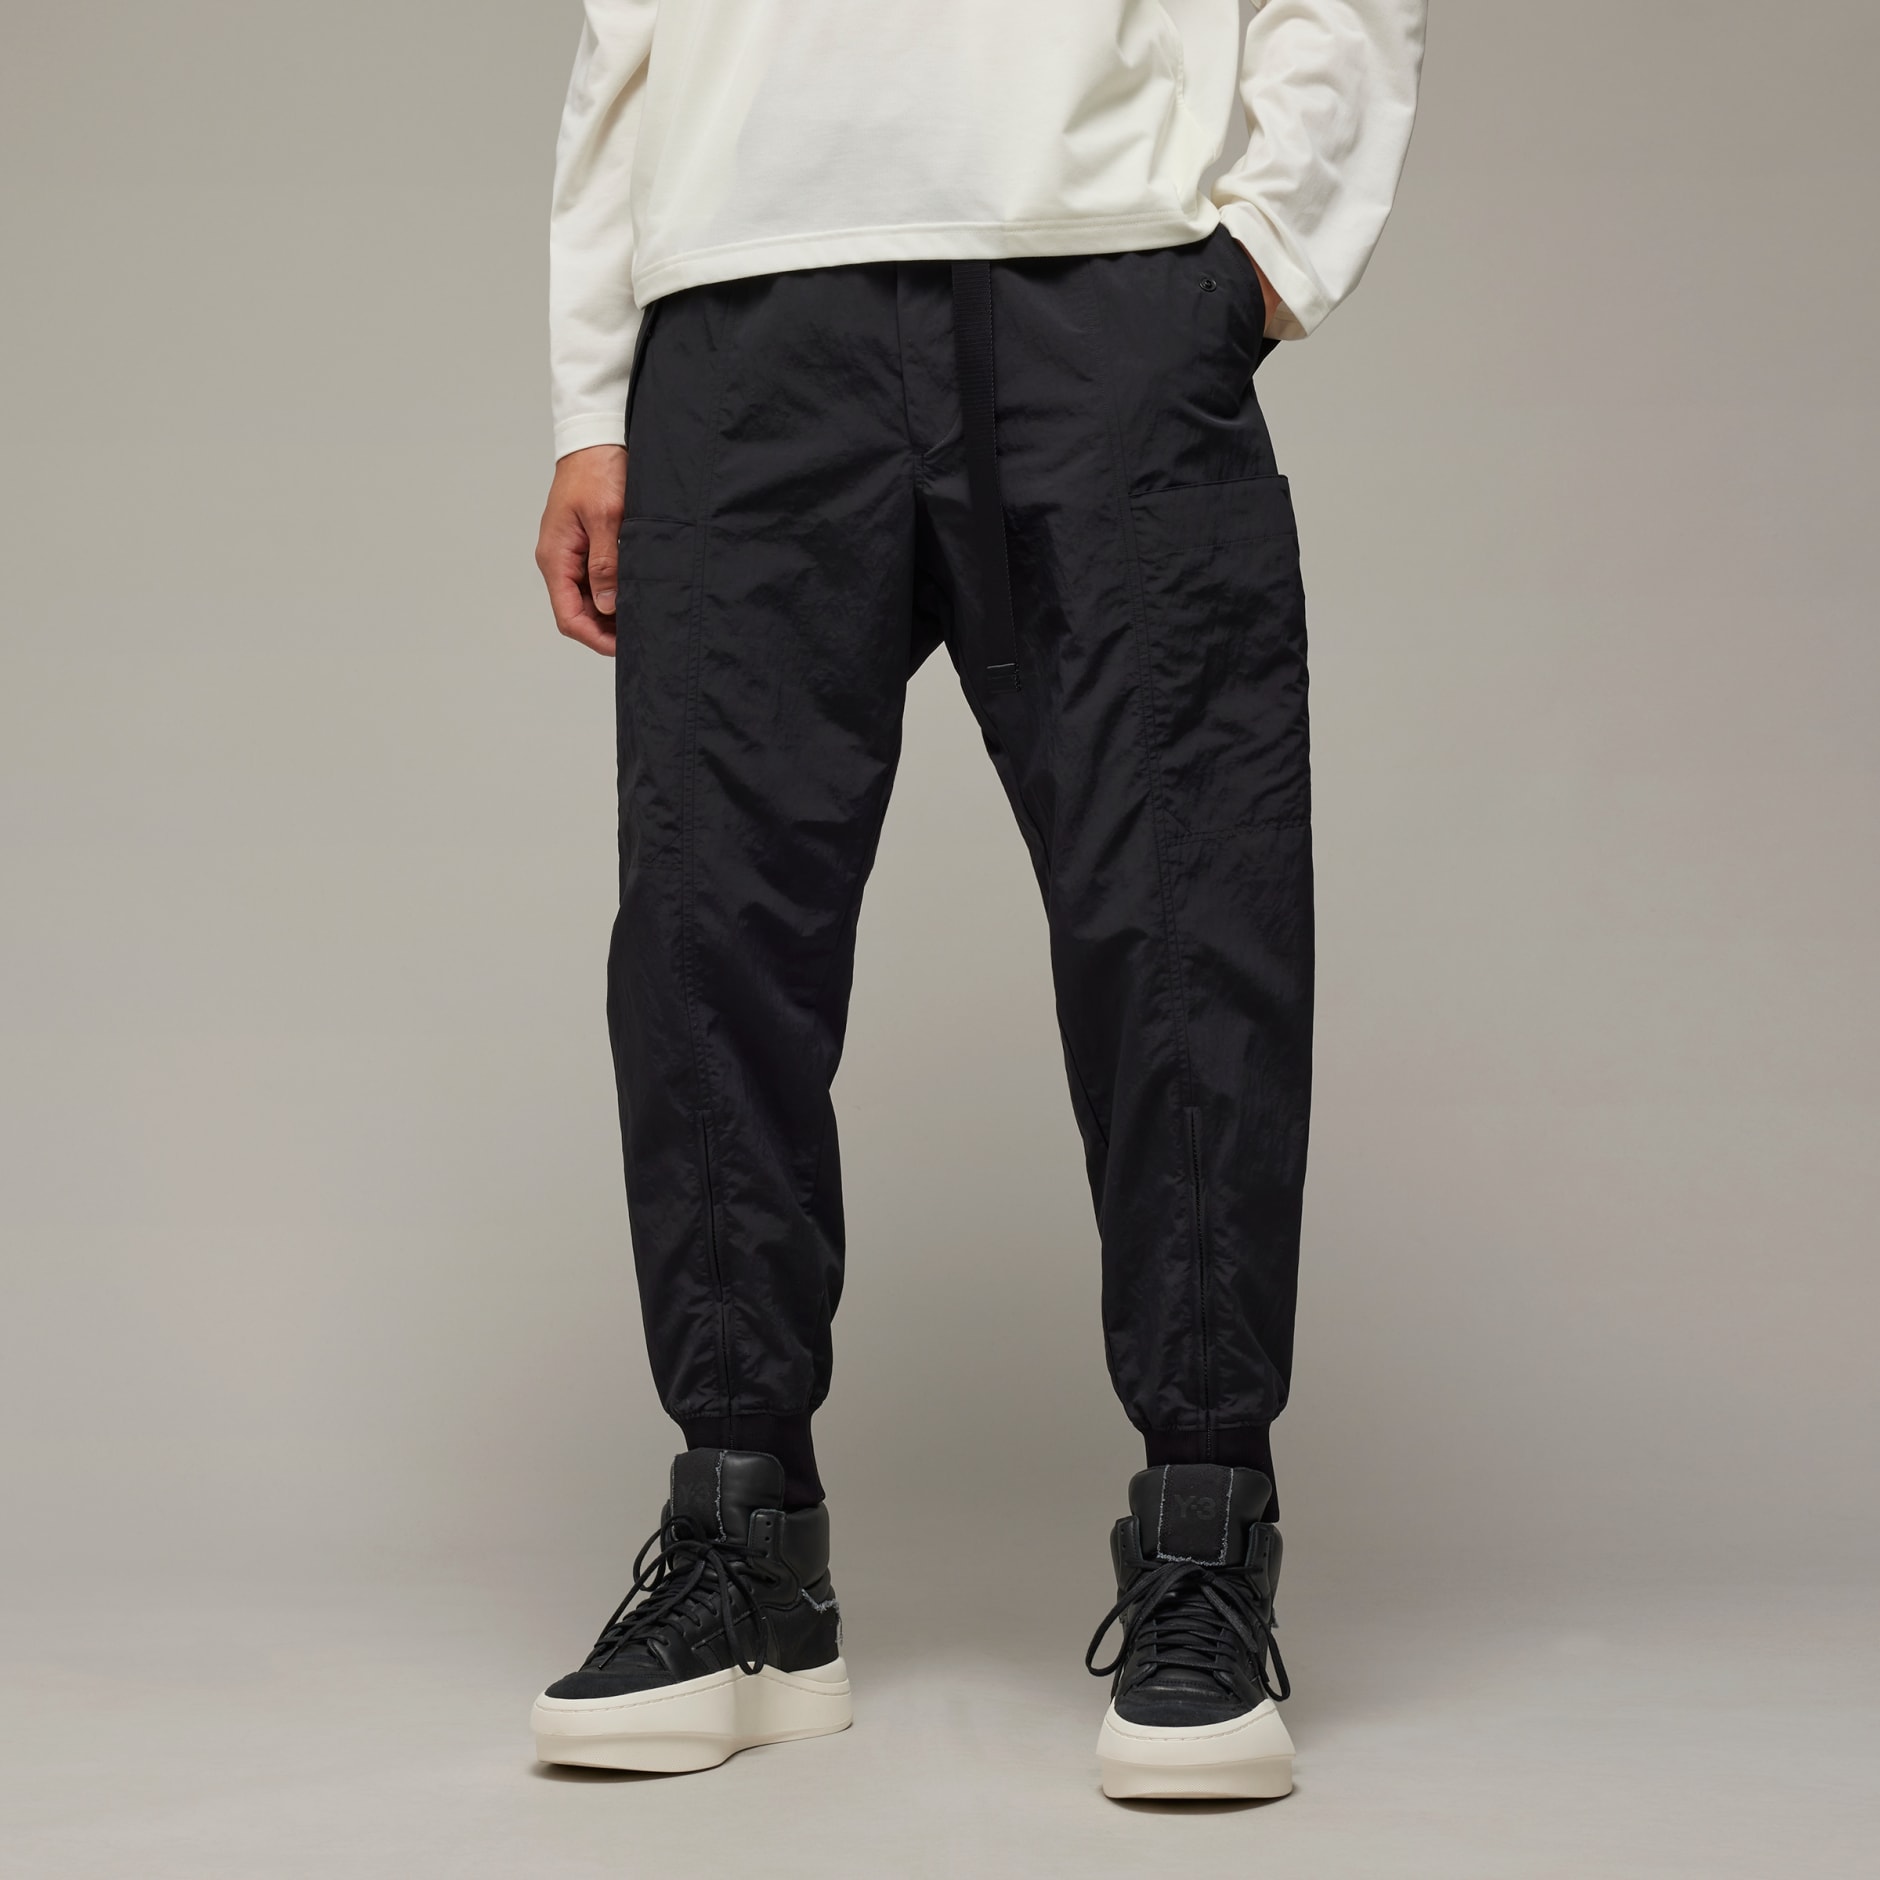 Clothing - Y-3 Crinkle Nylon Cuffed Pants - Black | adidas South Africa